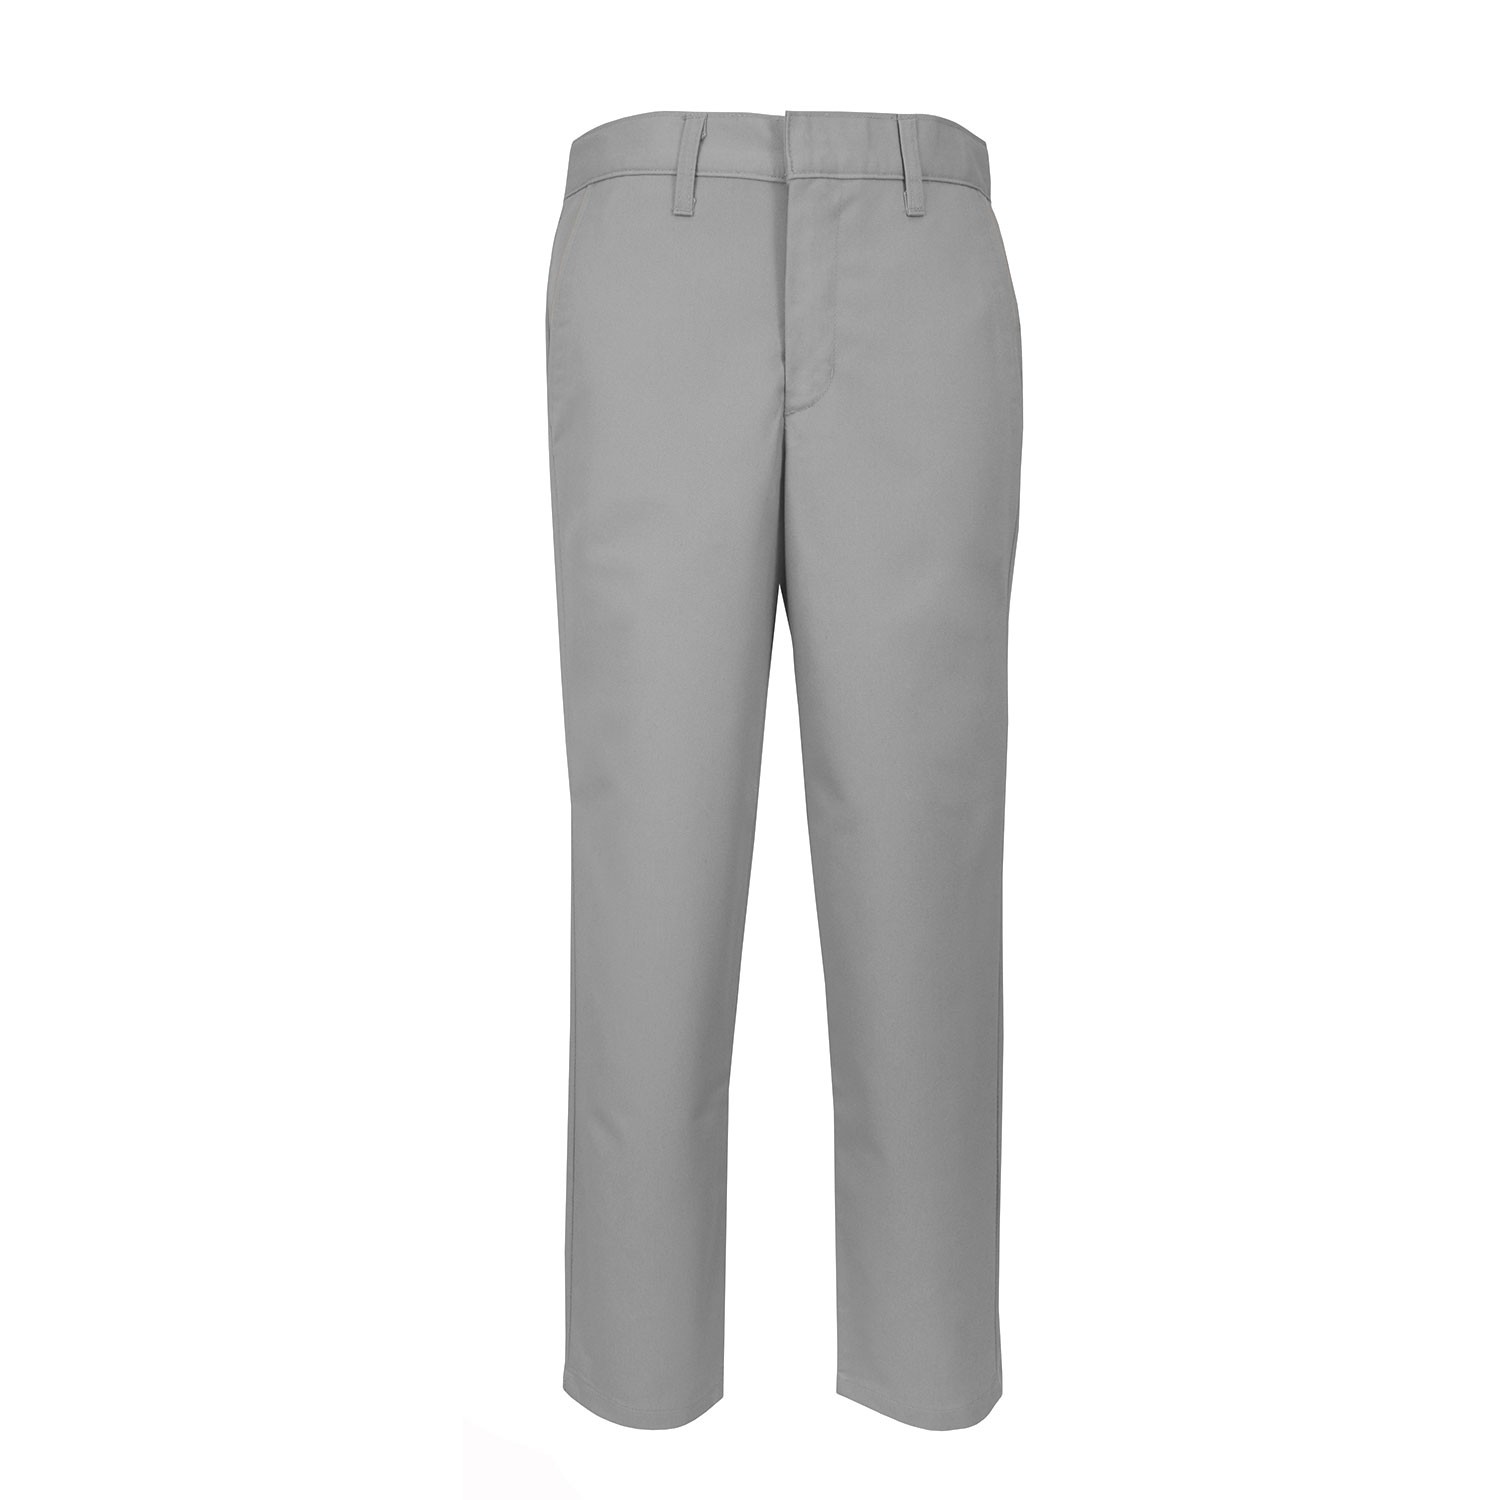 Boys Grey Flat Front Pants